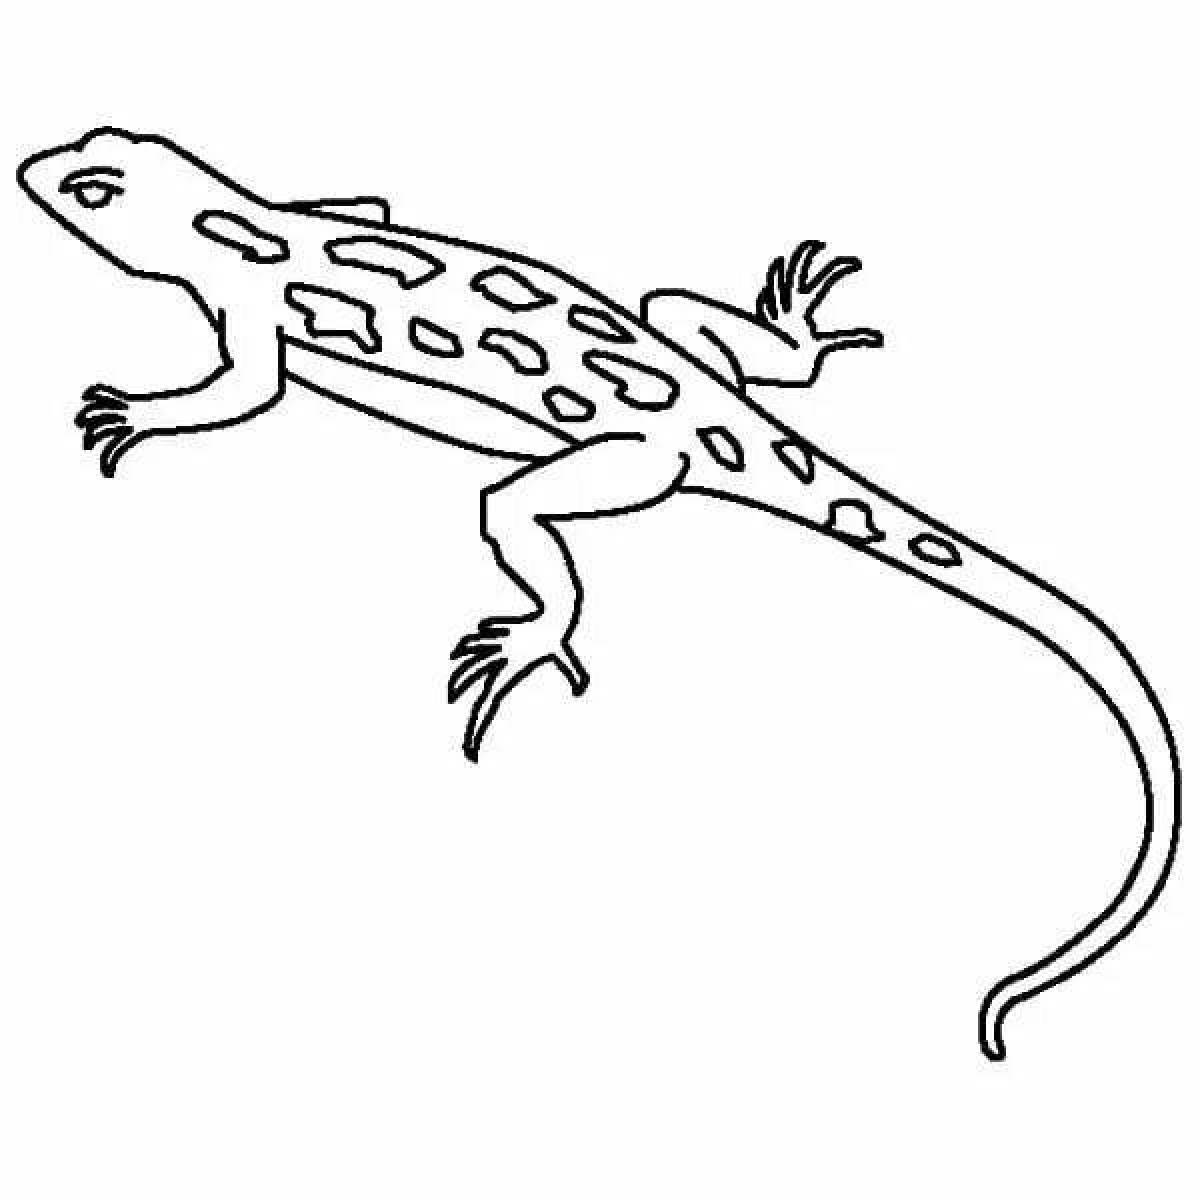 Delightful gecko coloring